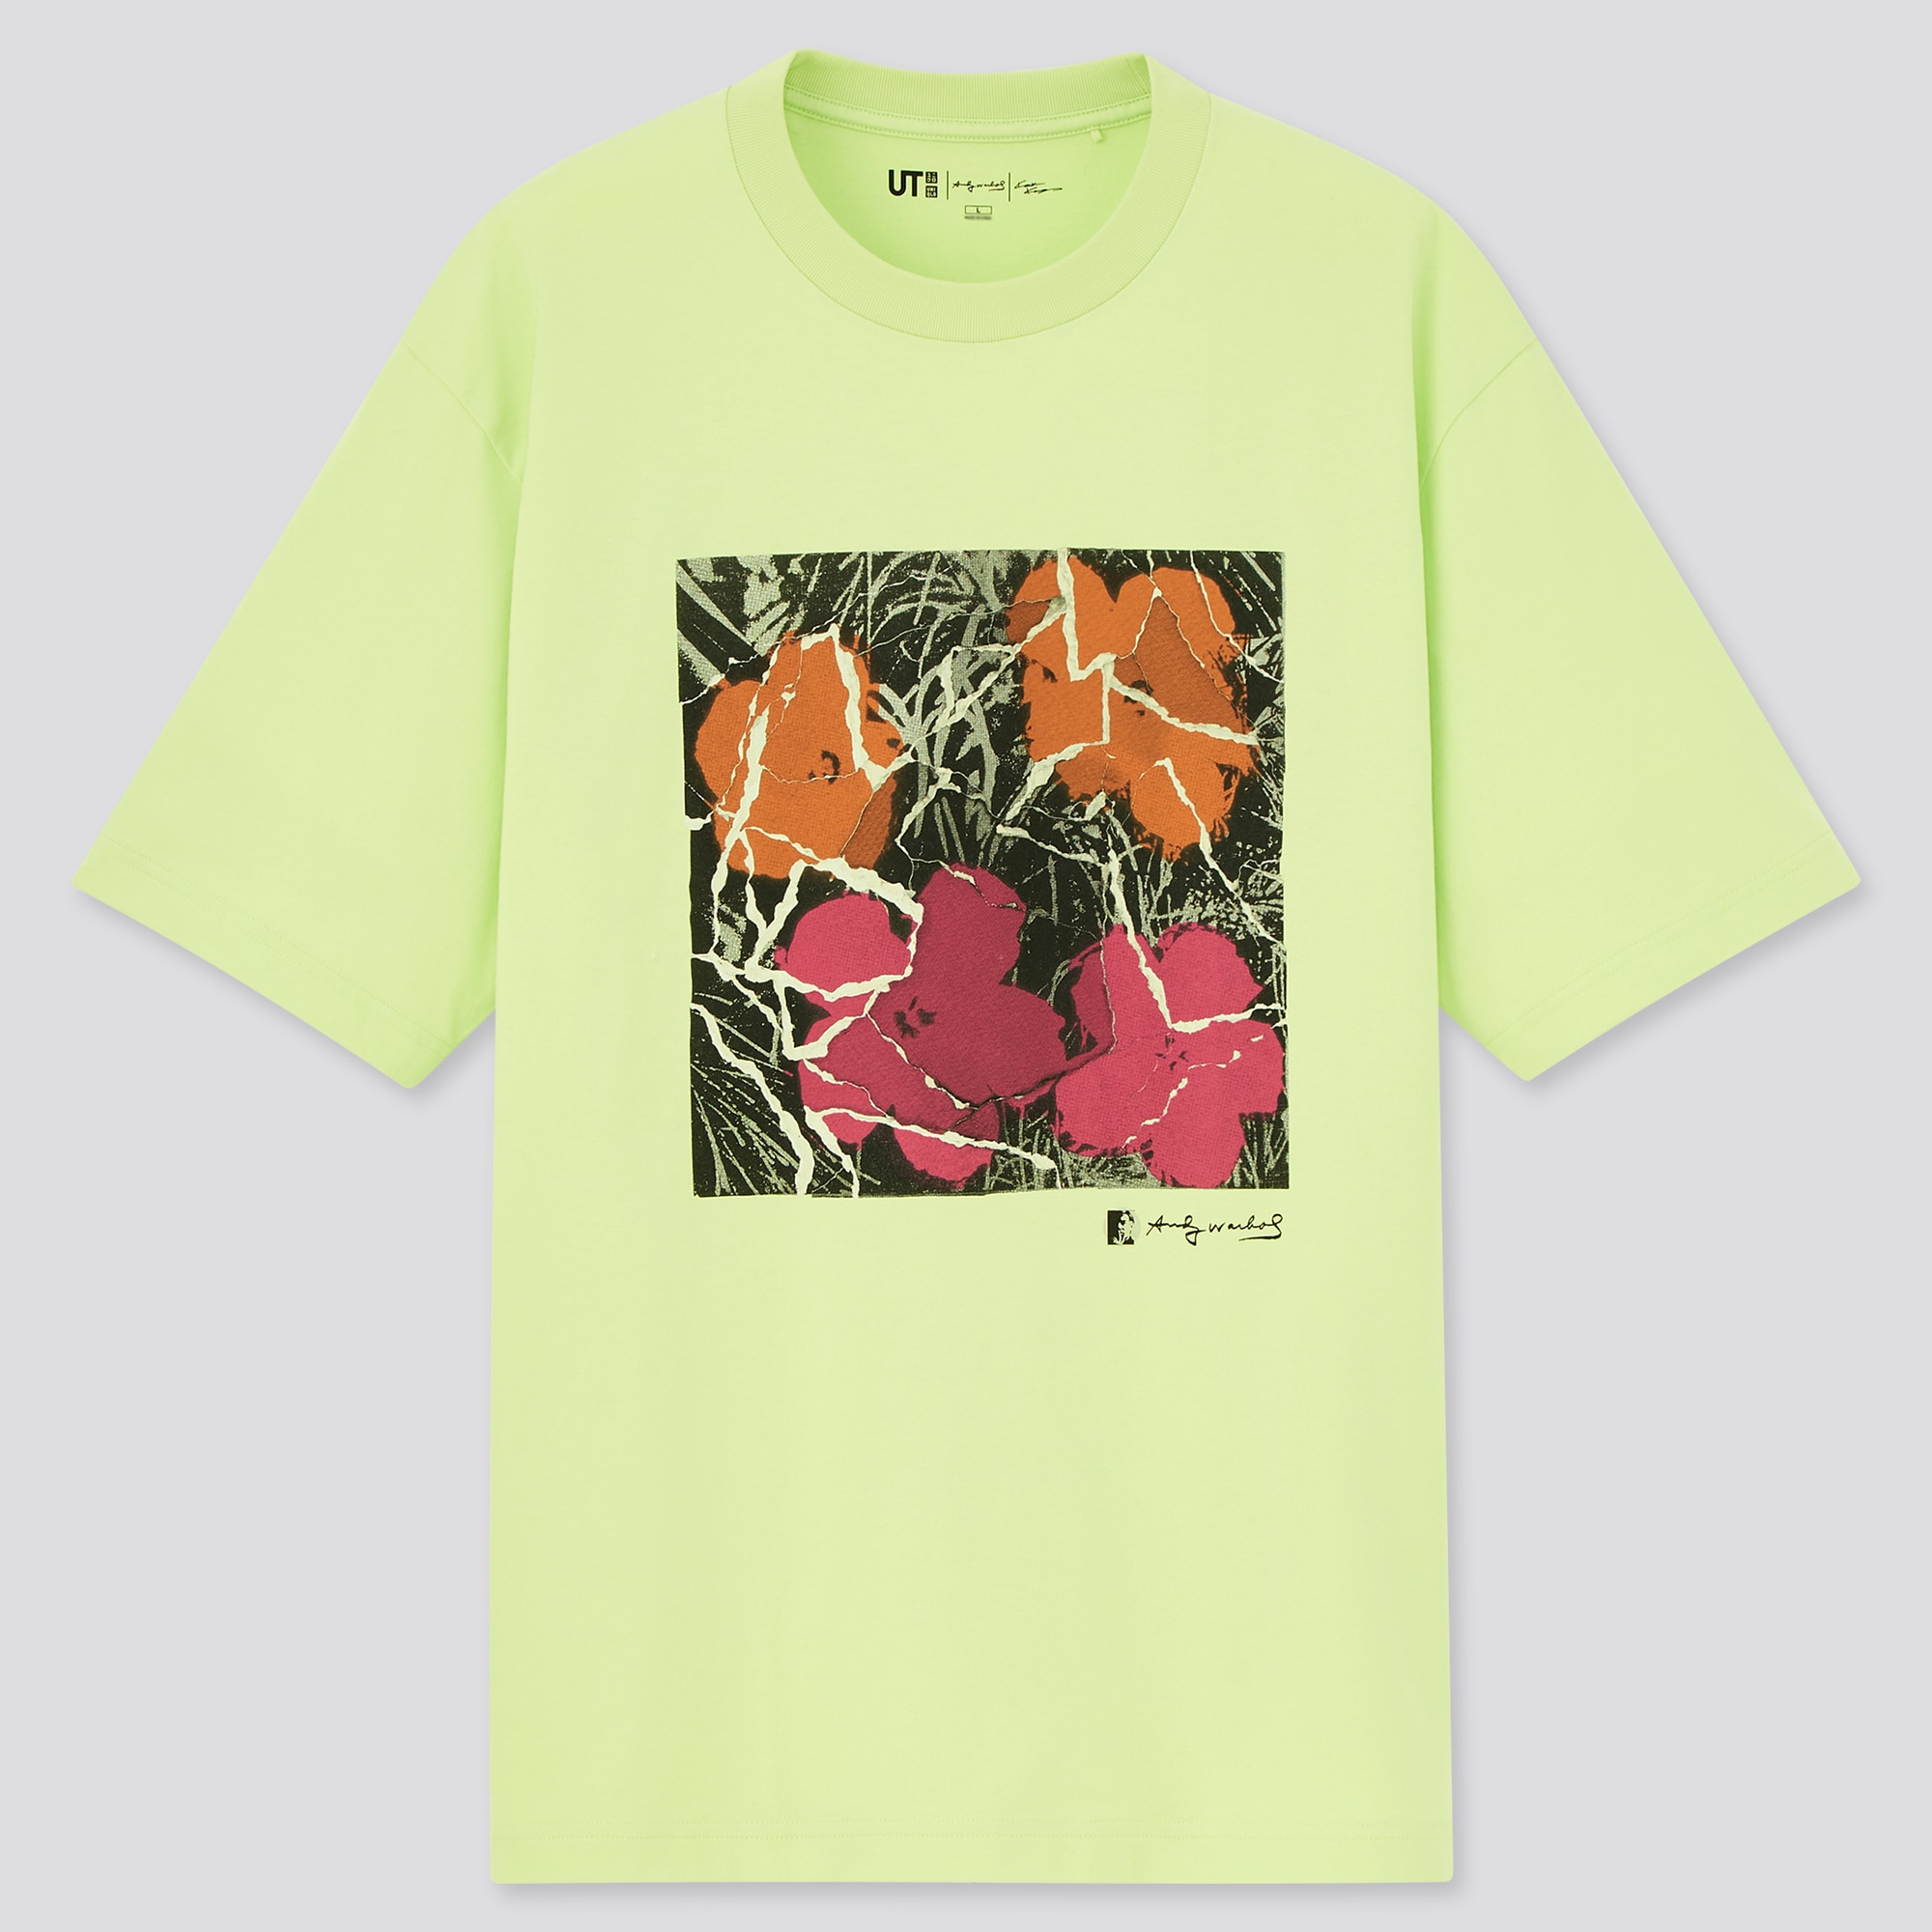 Andy Warhol x Kawamura UT (Short-Sleeve Graphic T-Shirt) | UNIQLO US